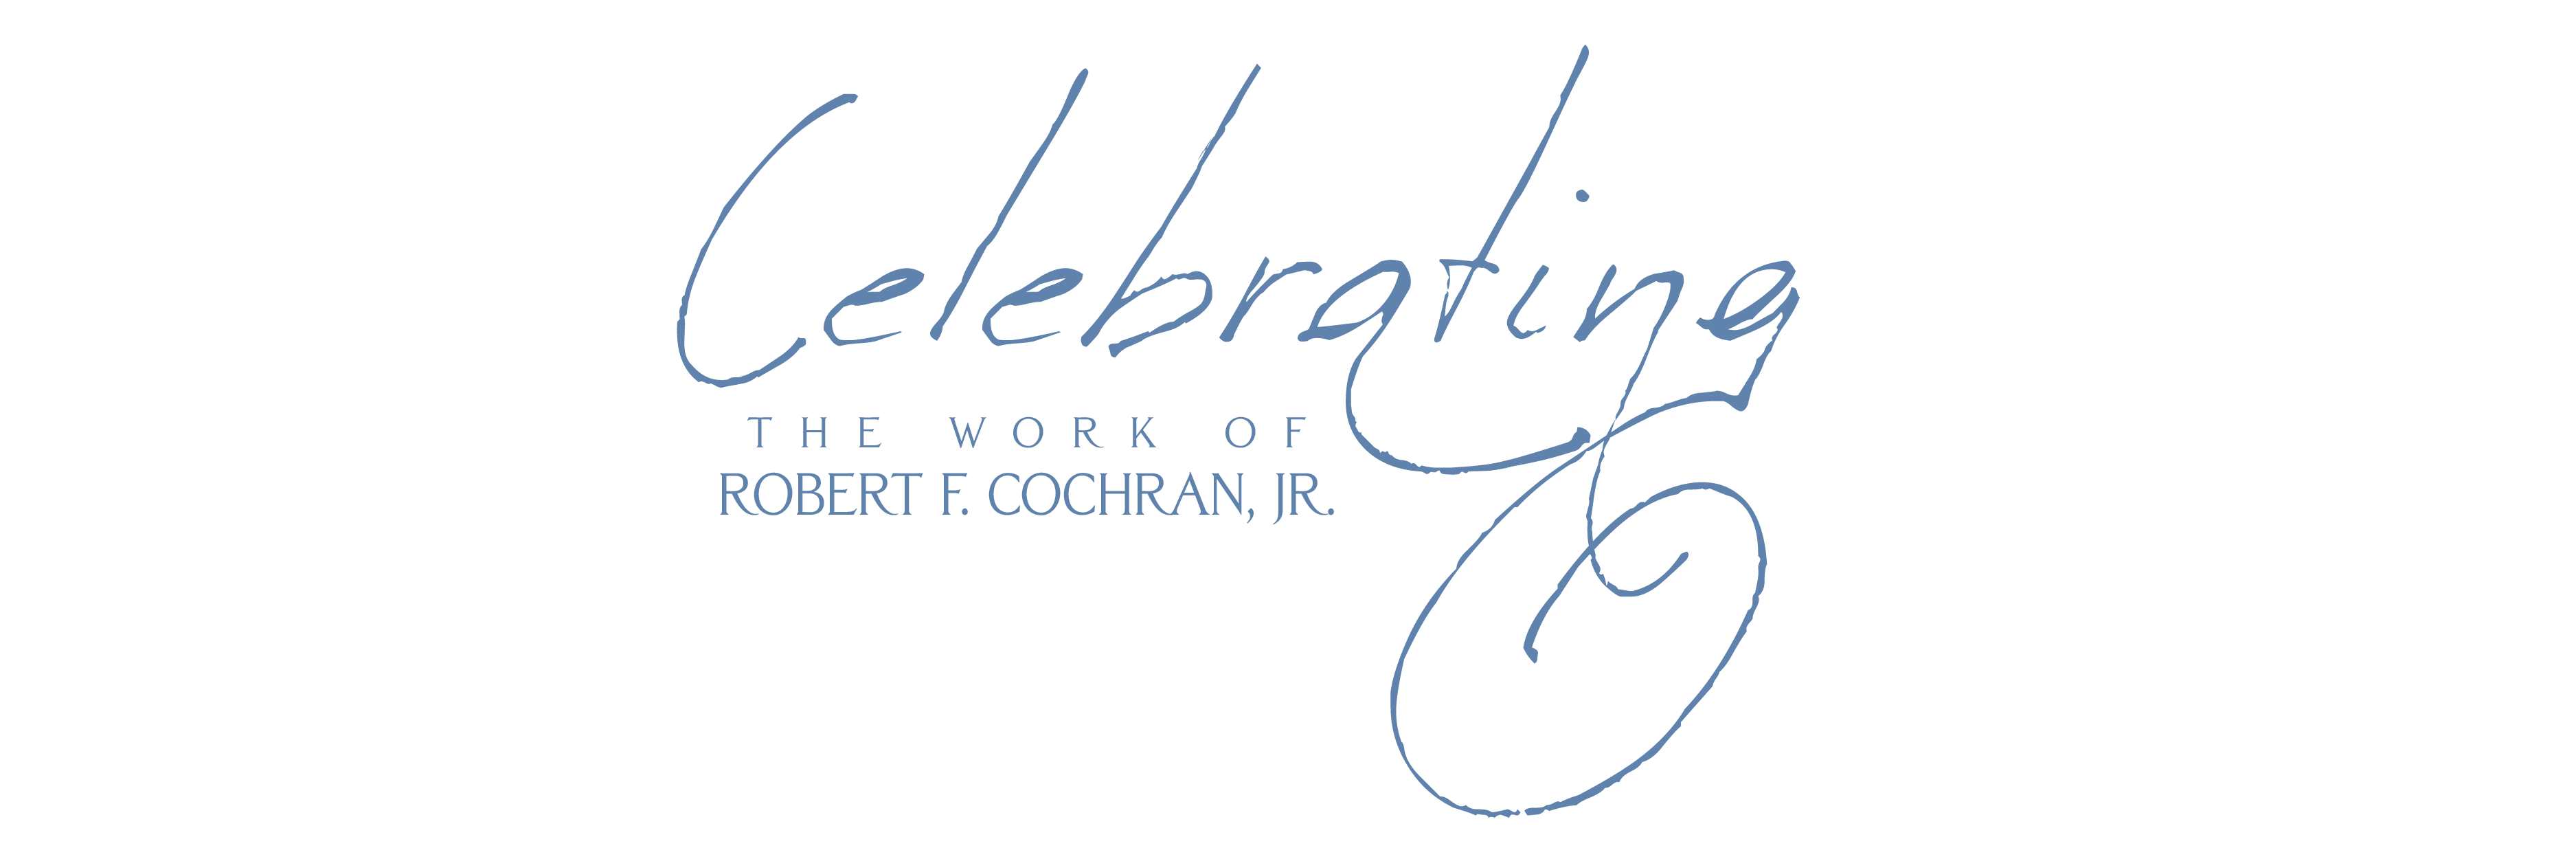 Celebrating the Work of Robert F. Cochran, Jr.